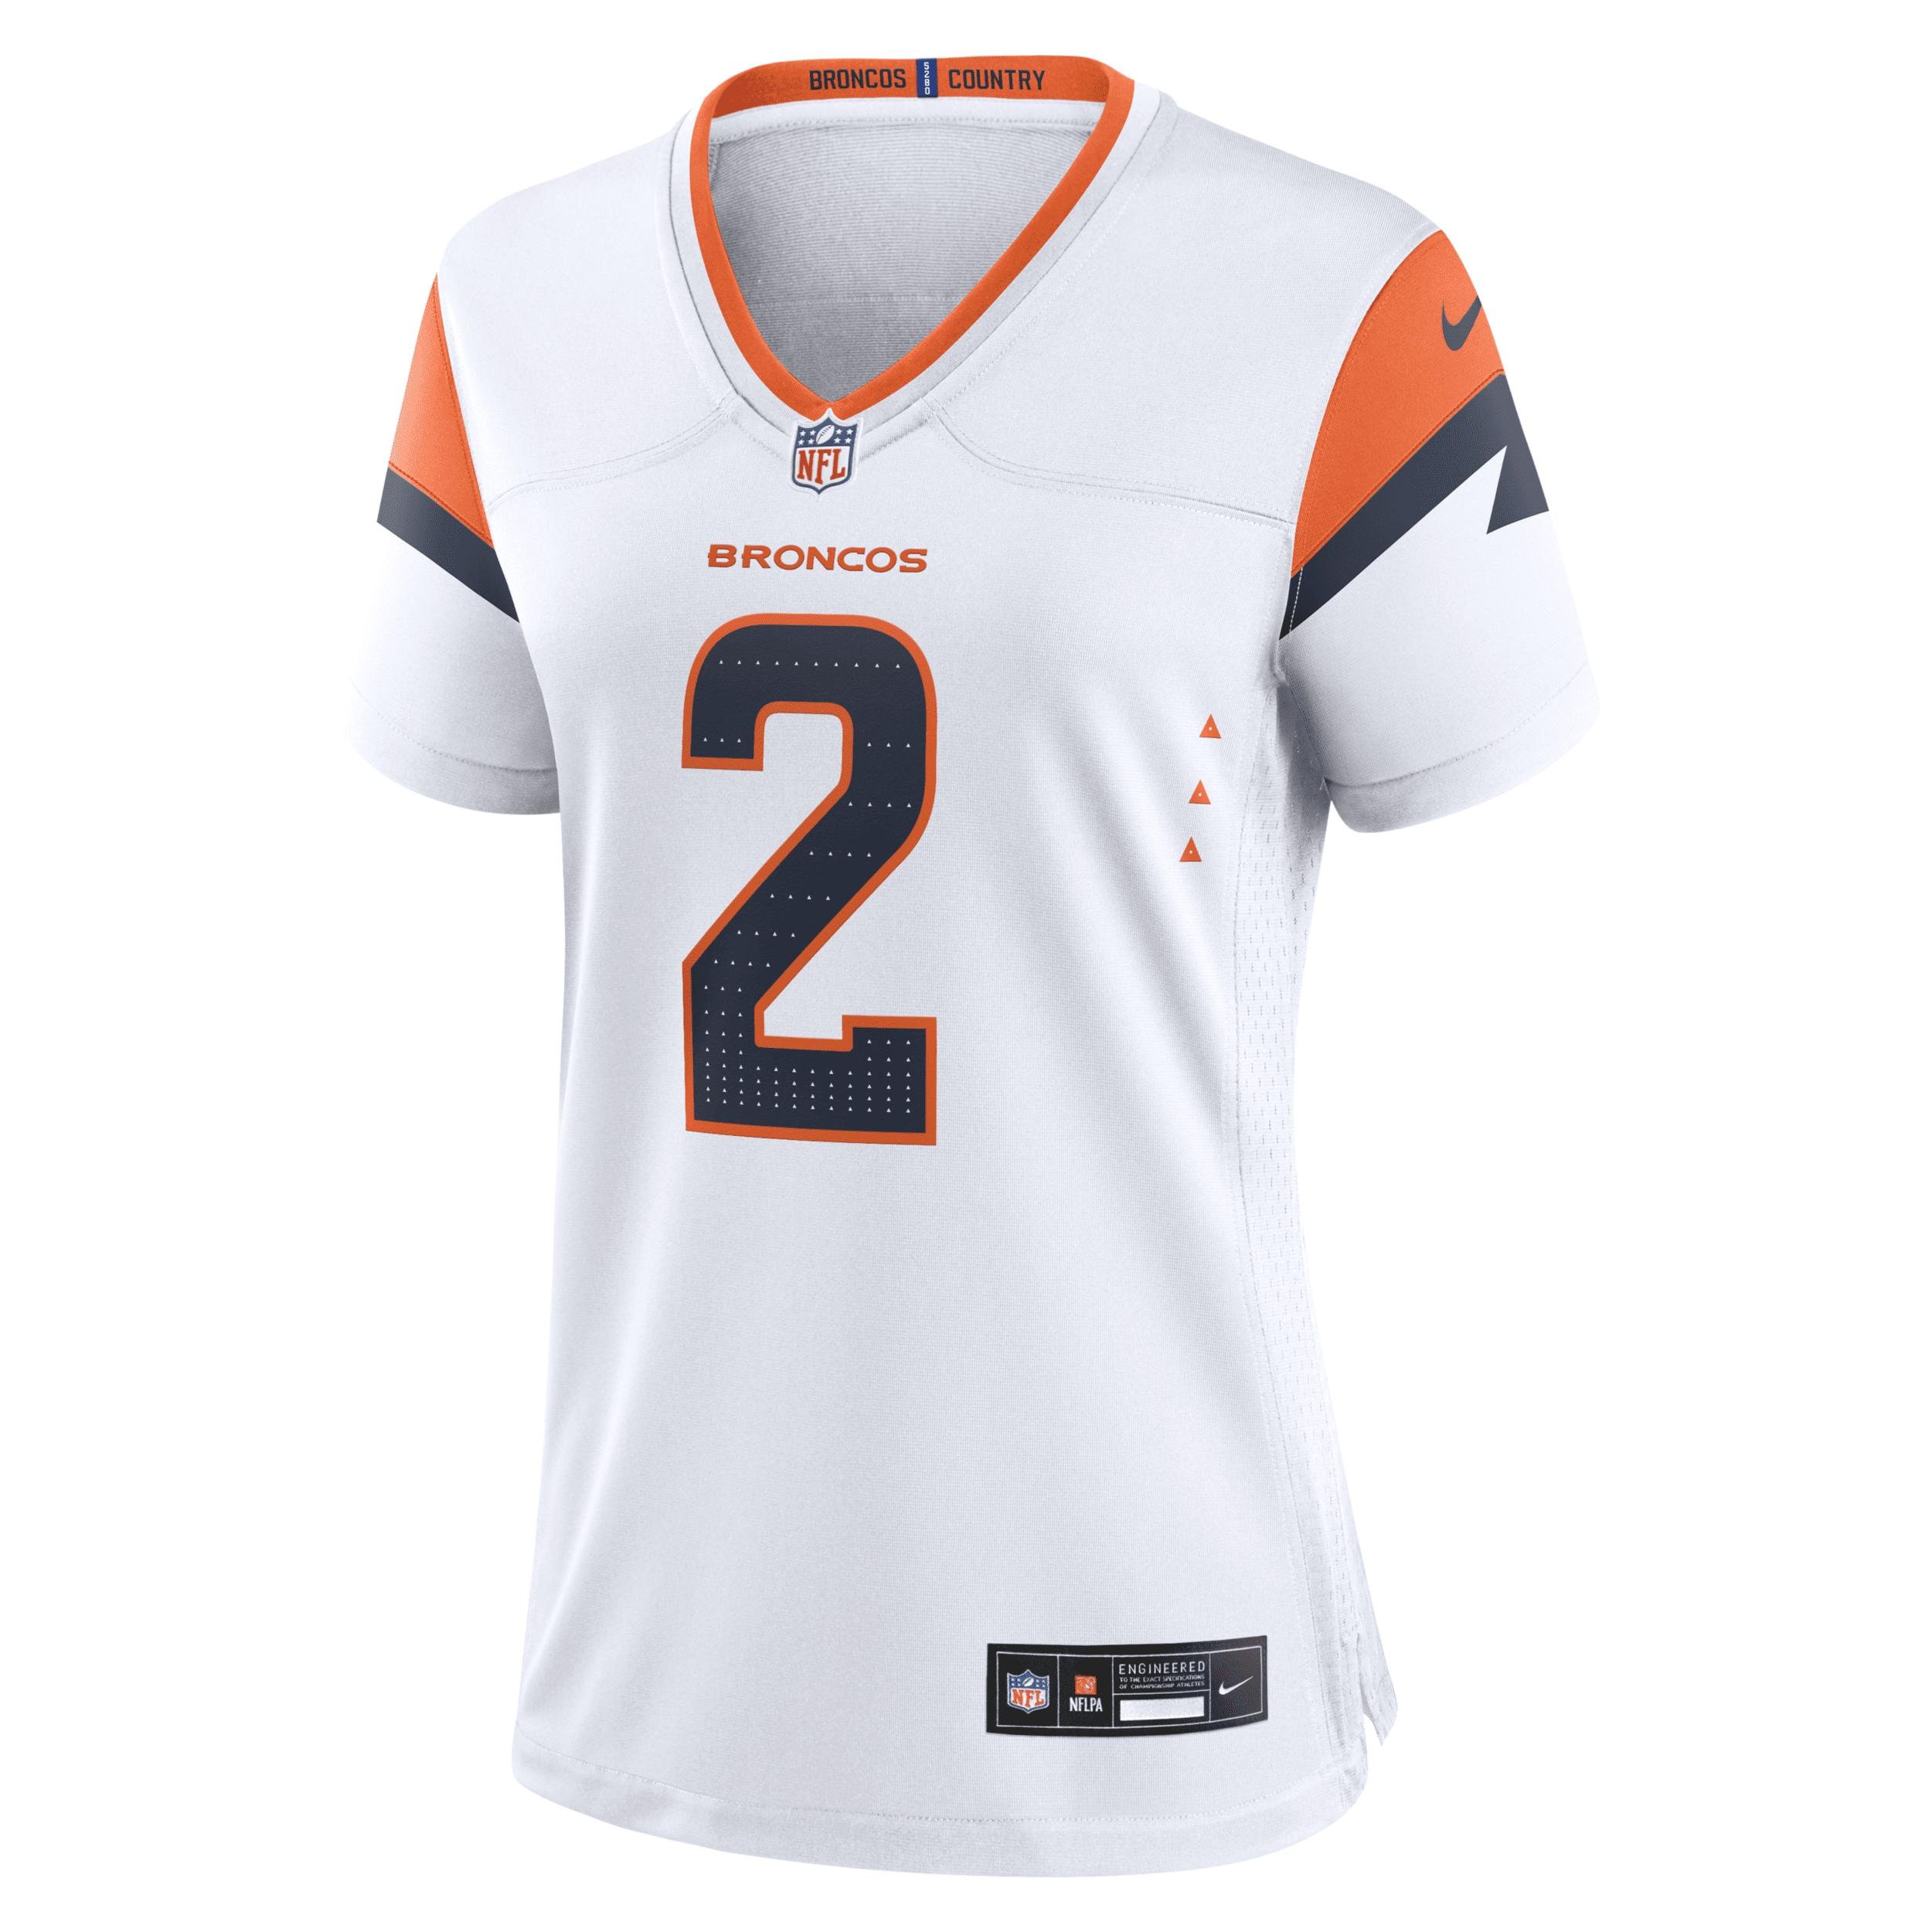 Patrick Surtain II Denver Broncos Nike Women's NFL Game Football Jersey by NIKE